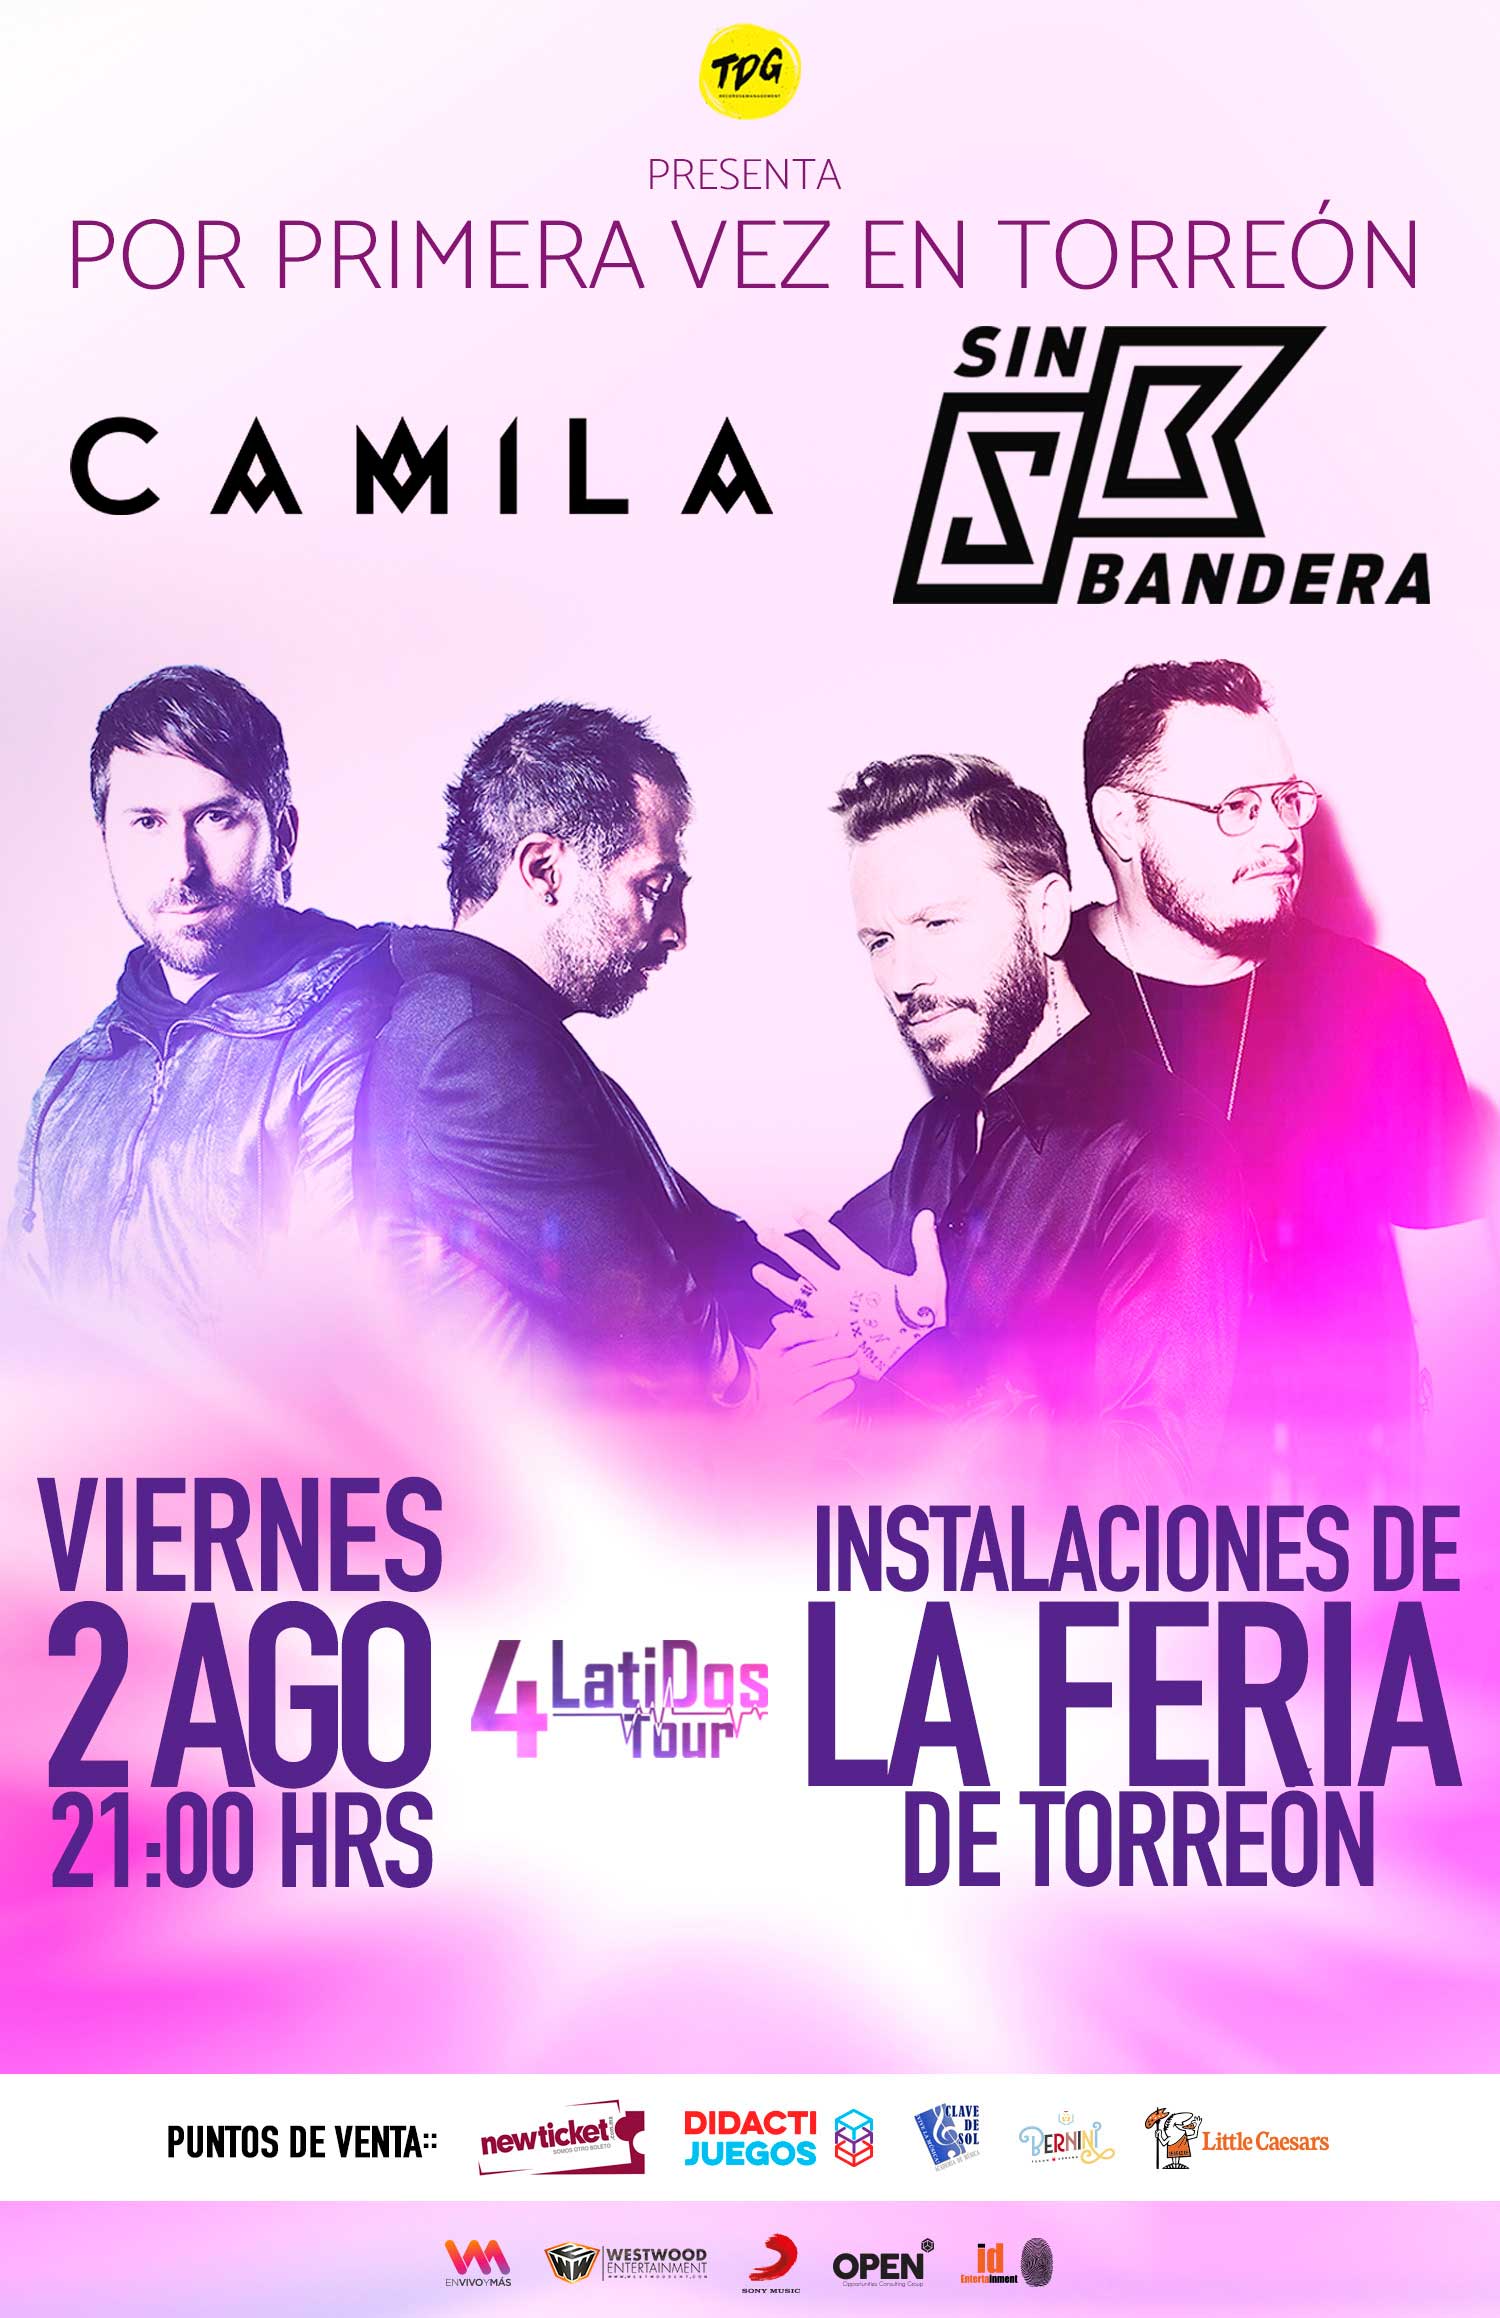 4 LATIDOS Tour en Torreón